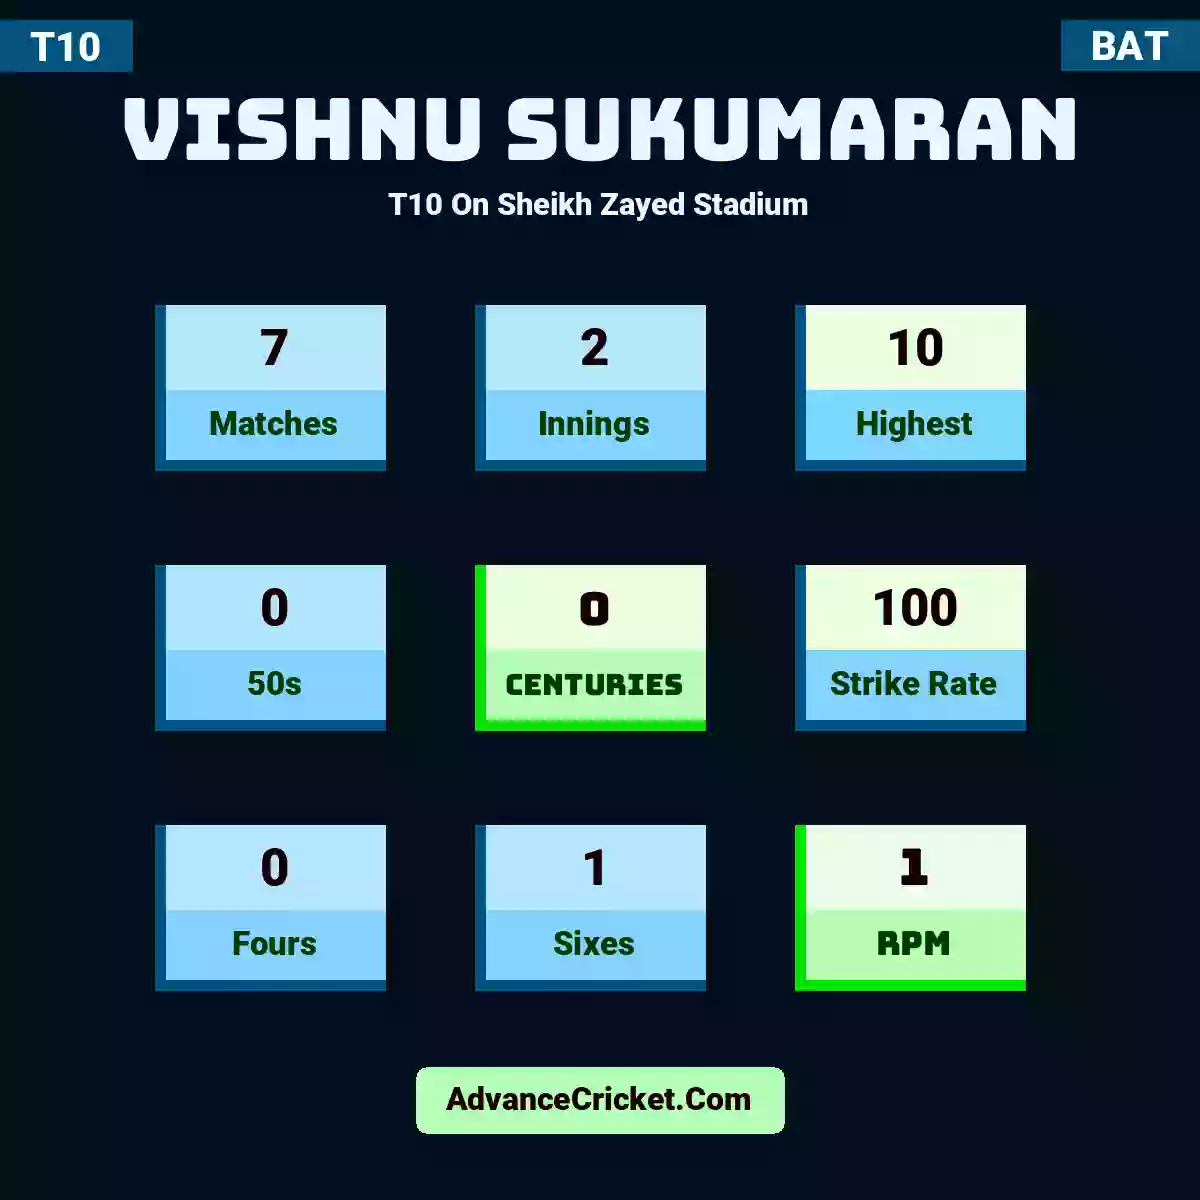 Vishnu Sukumaran T10  On Sheikh Zayed Stadium, Vishnu Sukumaran played 7 matches, scored 10 runs as highest, 0 half-centuries, and 0 centuries, with a strike rate of 100. V.Sukumaran hit 0 fours and 1 sixes, with an RPM of 1.